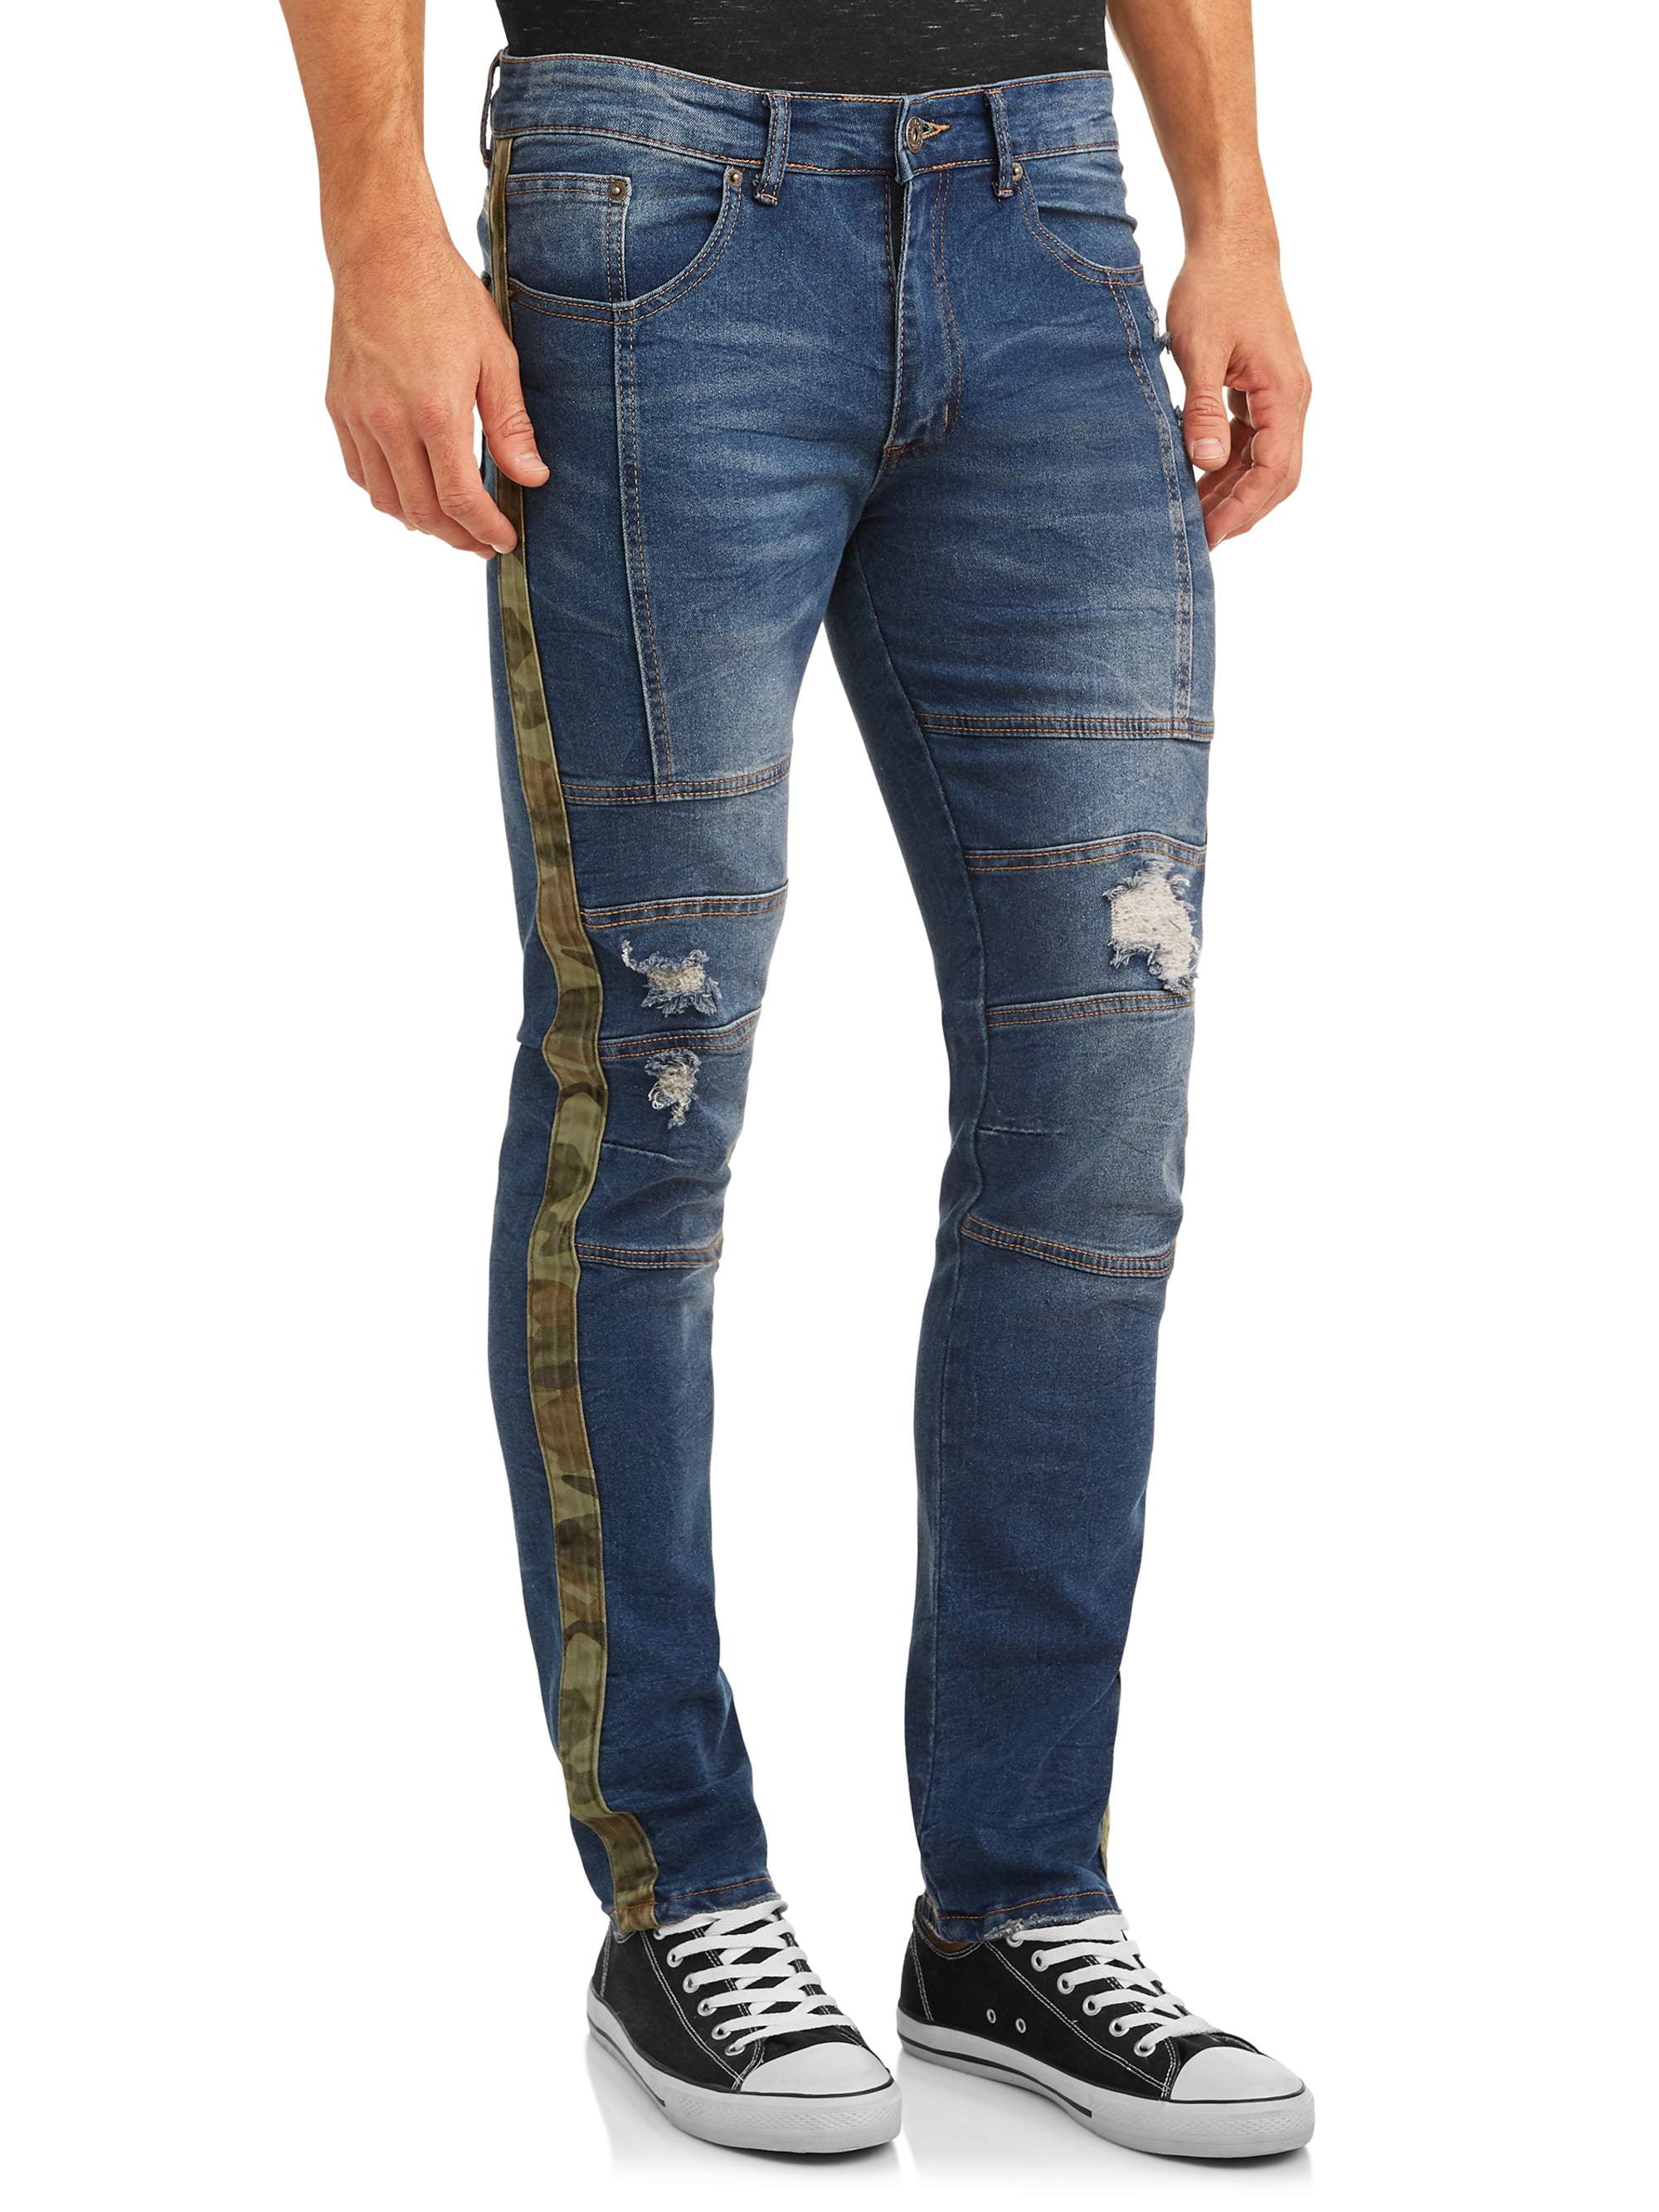 Modern Culture Men's Slim Stretch Moto Jean with Camo Taping - Walmart.com